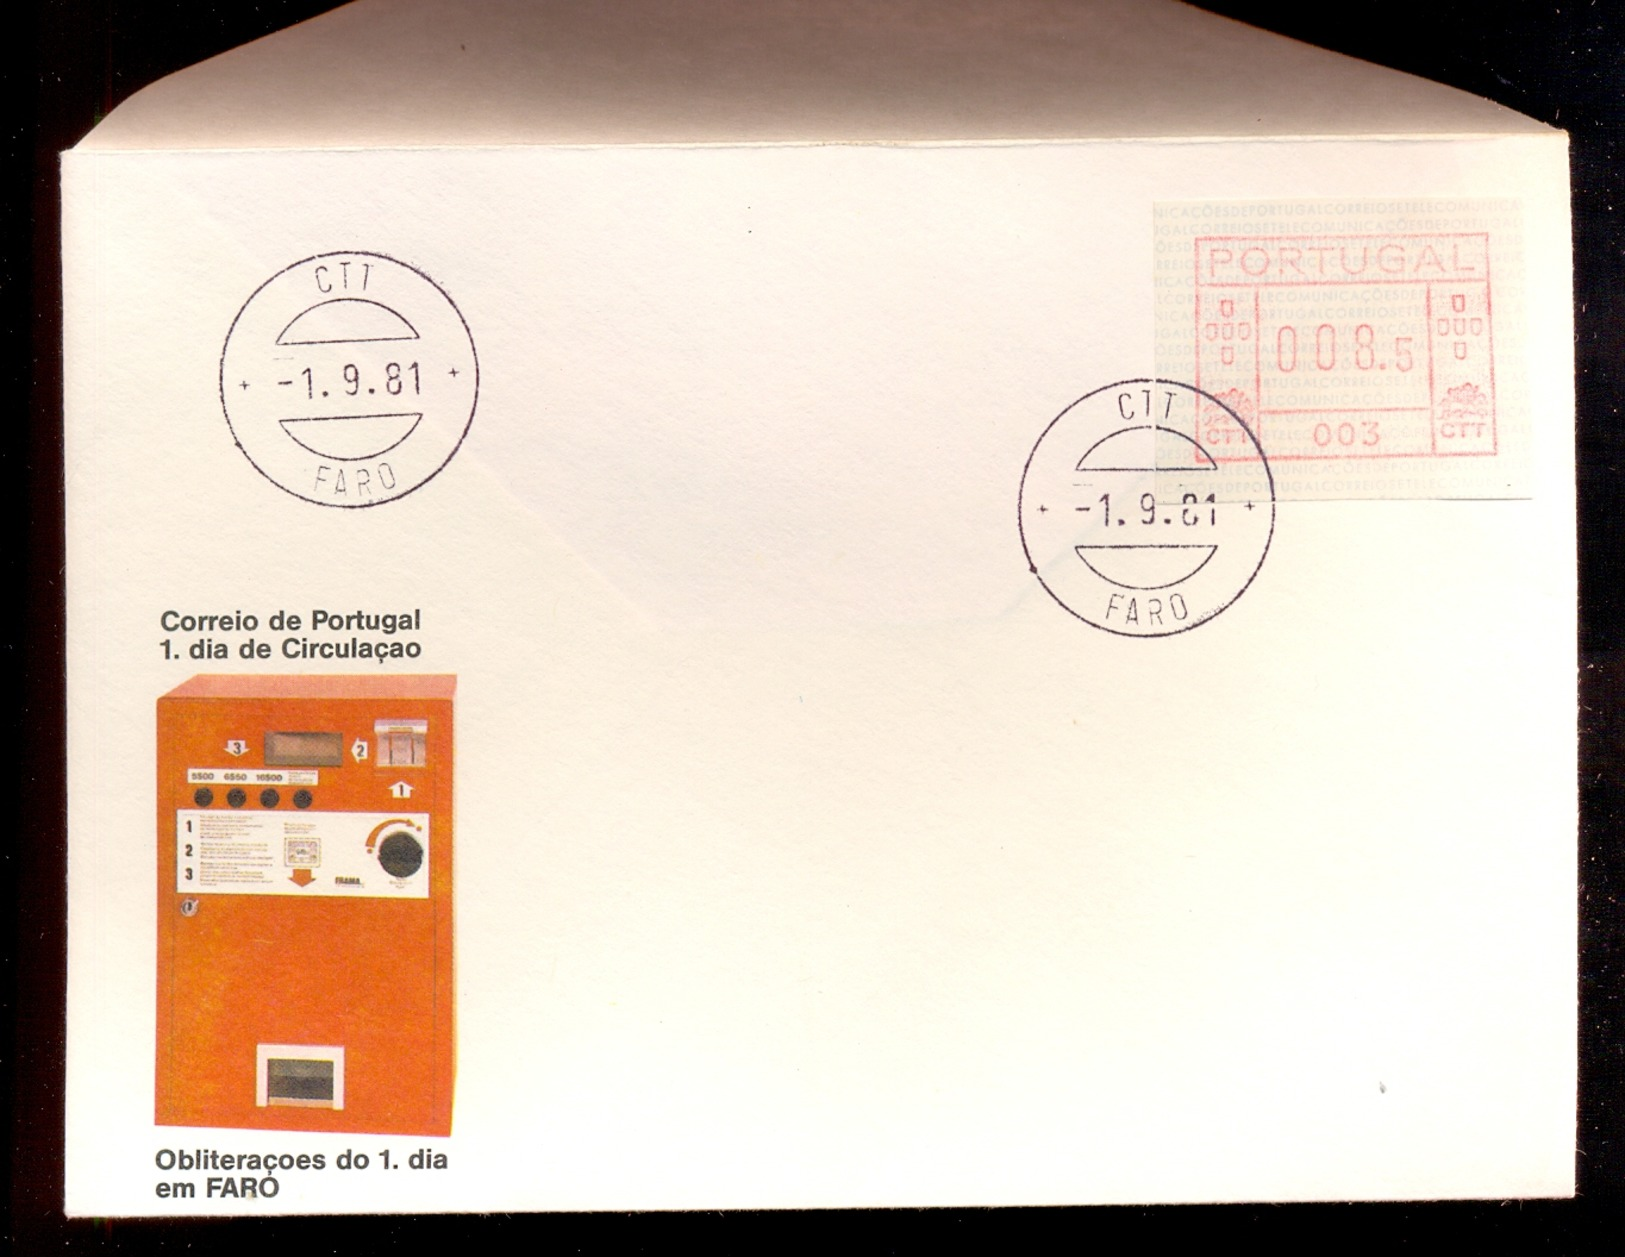 FDC PORTUGAL 003 FARO * 008.5 * 1981 * LABEL ATM FRAMA - Timbres De Distributeurs [ATM]